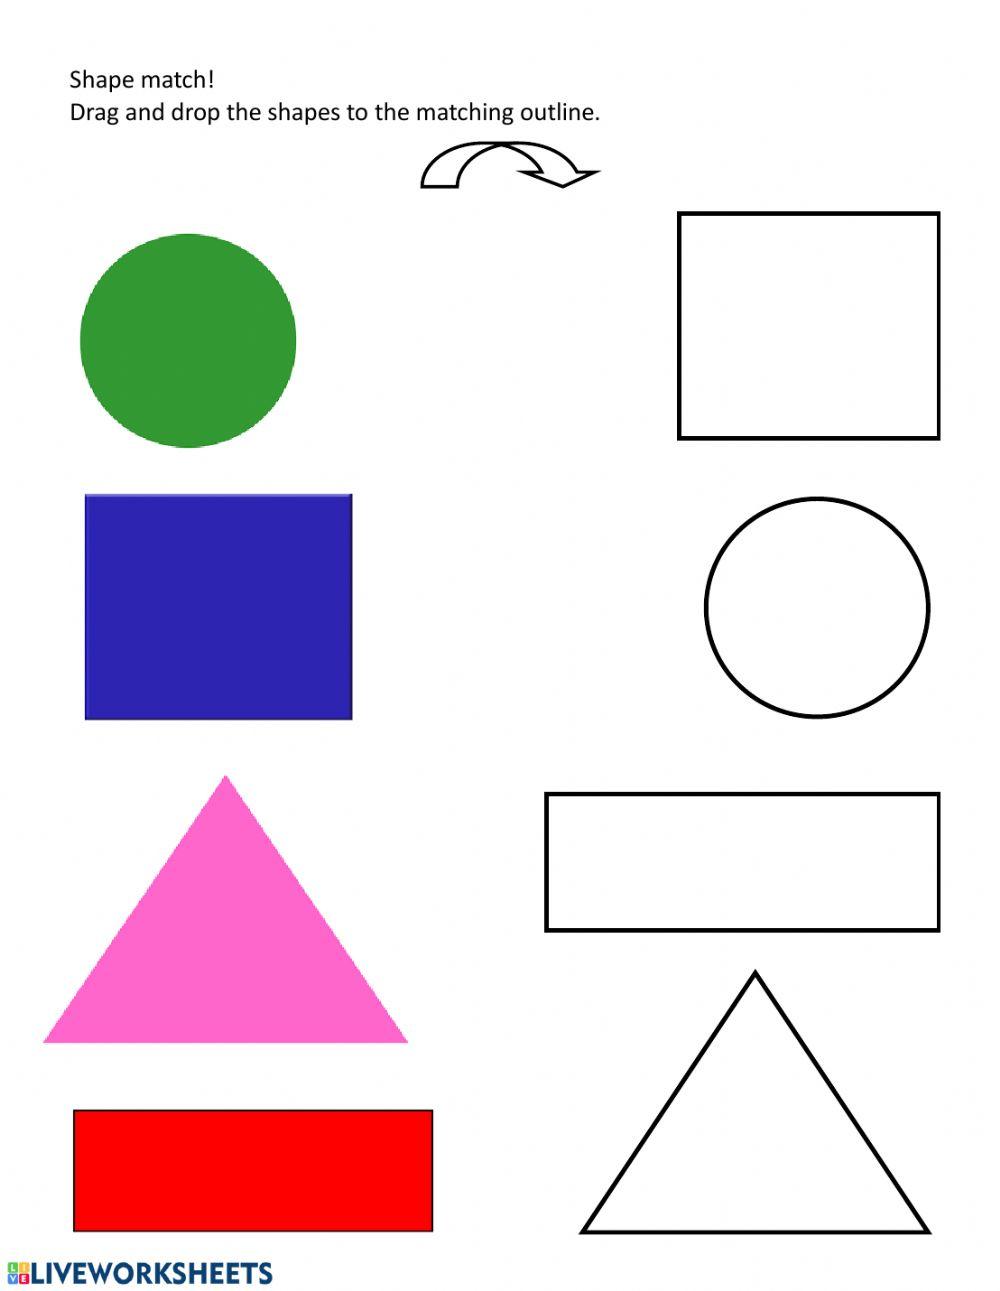 Matching 4 shapes